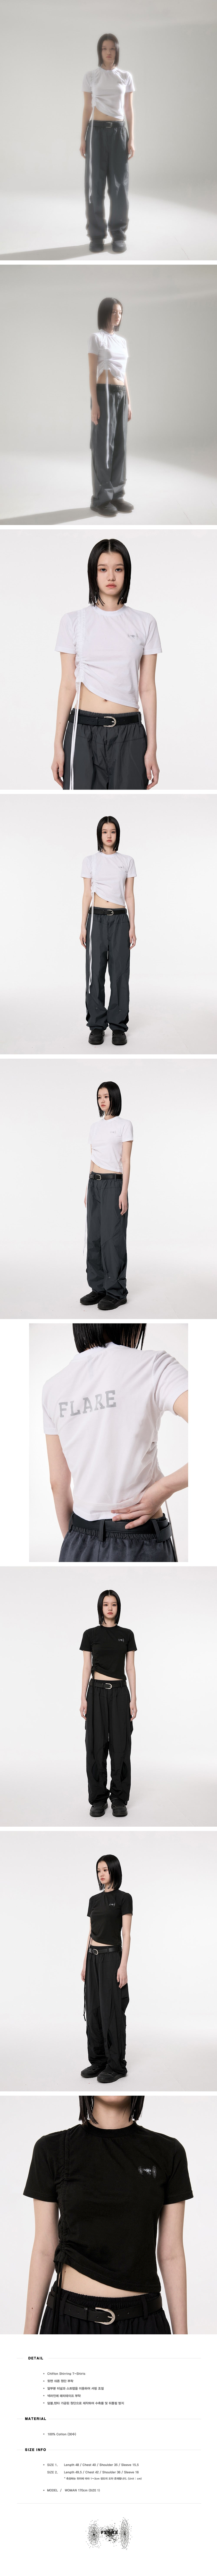 Chiffon Shirring T-Shirts (FL-103_White)